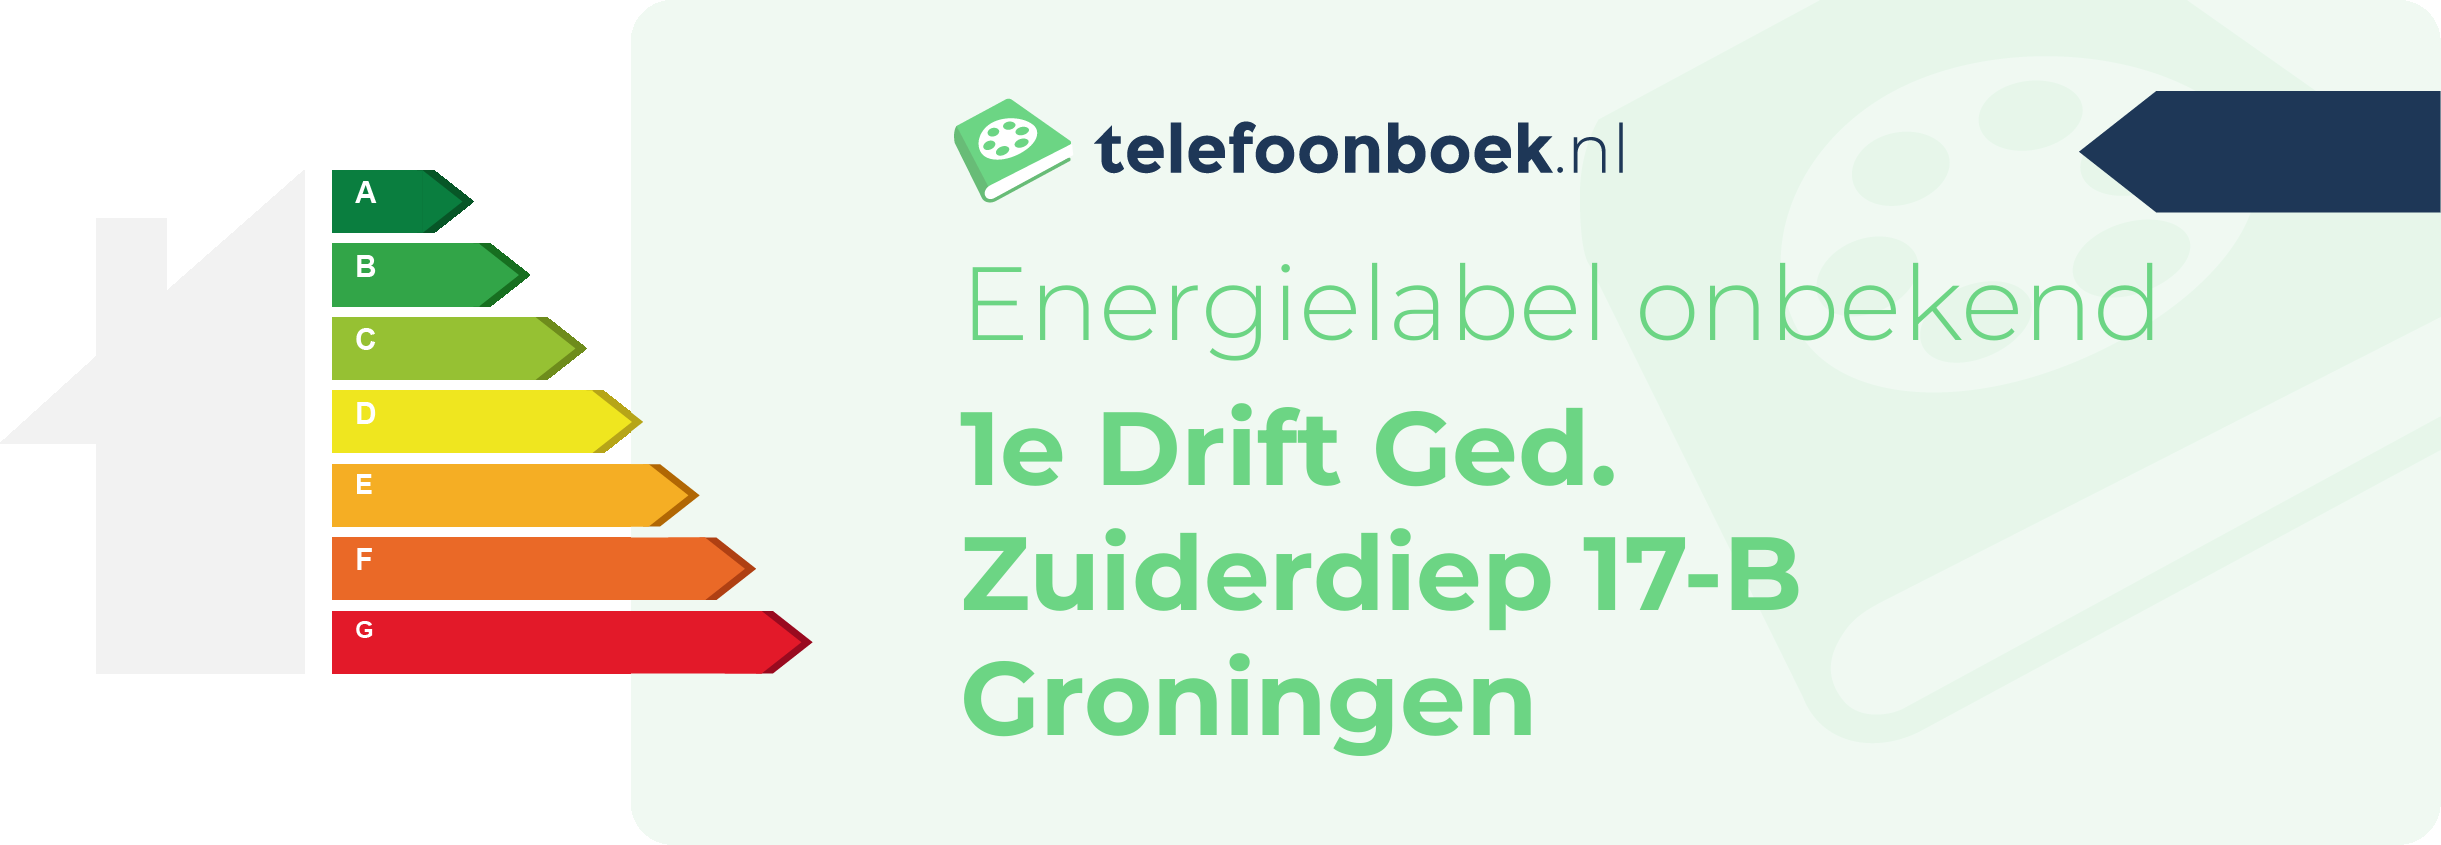 Energielabel 1e Drift Ged. Zuiderdiep 17-B Groningen